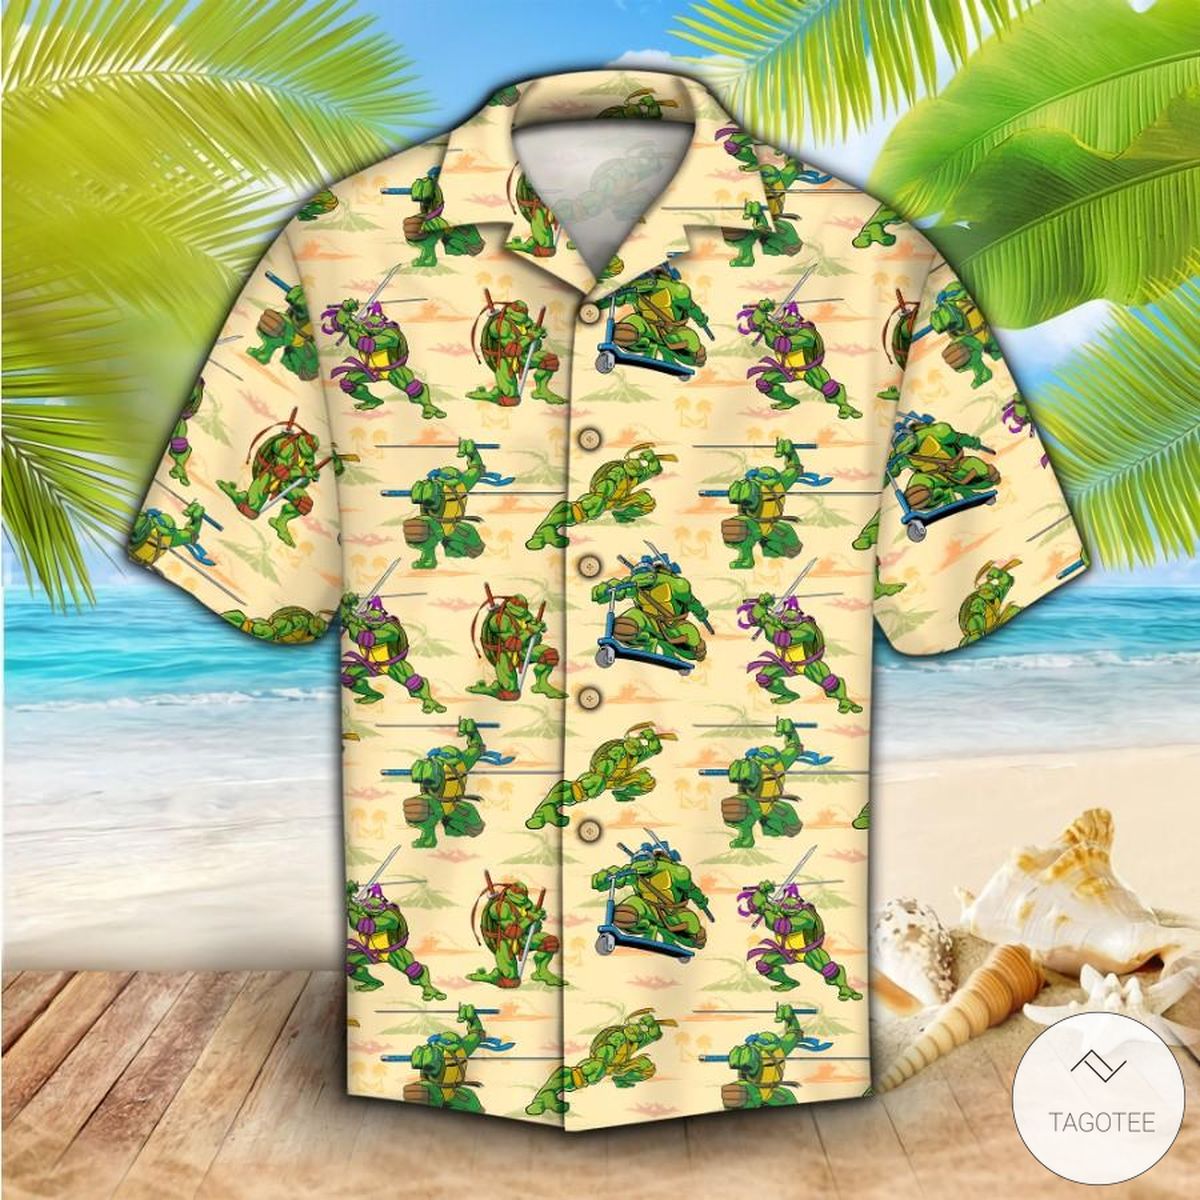 https://leesilkshop.com/wp-content/uploads/2021/06/The-Teenage-Mutant-Ninja-Turtles-TMNT-Hawaiian-Shirt.jpg